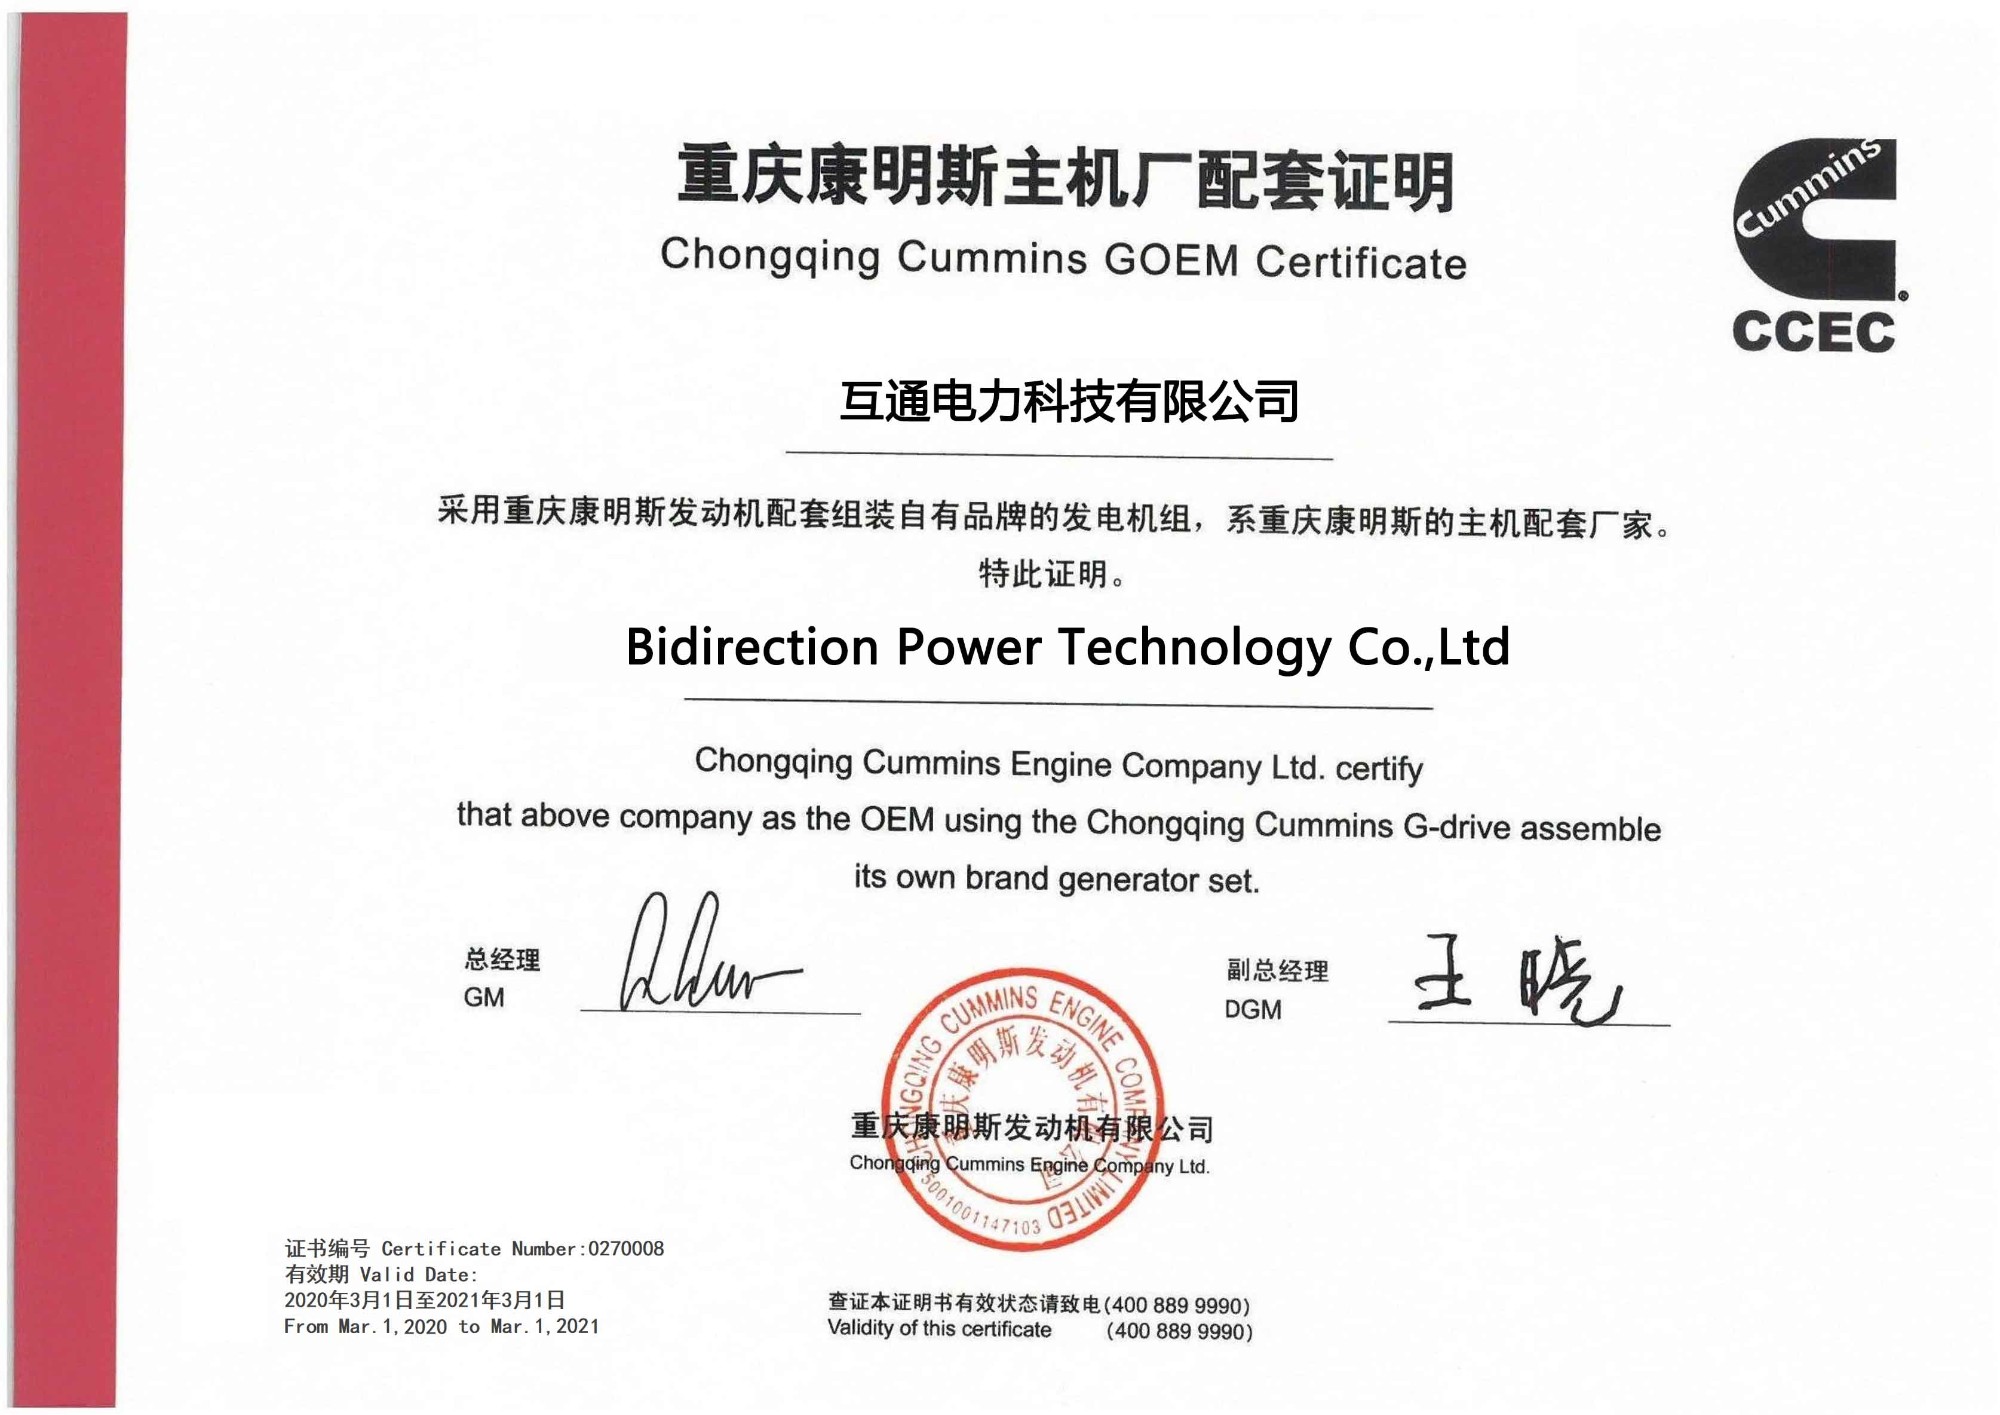 Bidirection Power Technology Co., Ltd Autorizováno certifikátem Chongqing Cummins GOEM